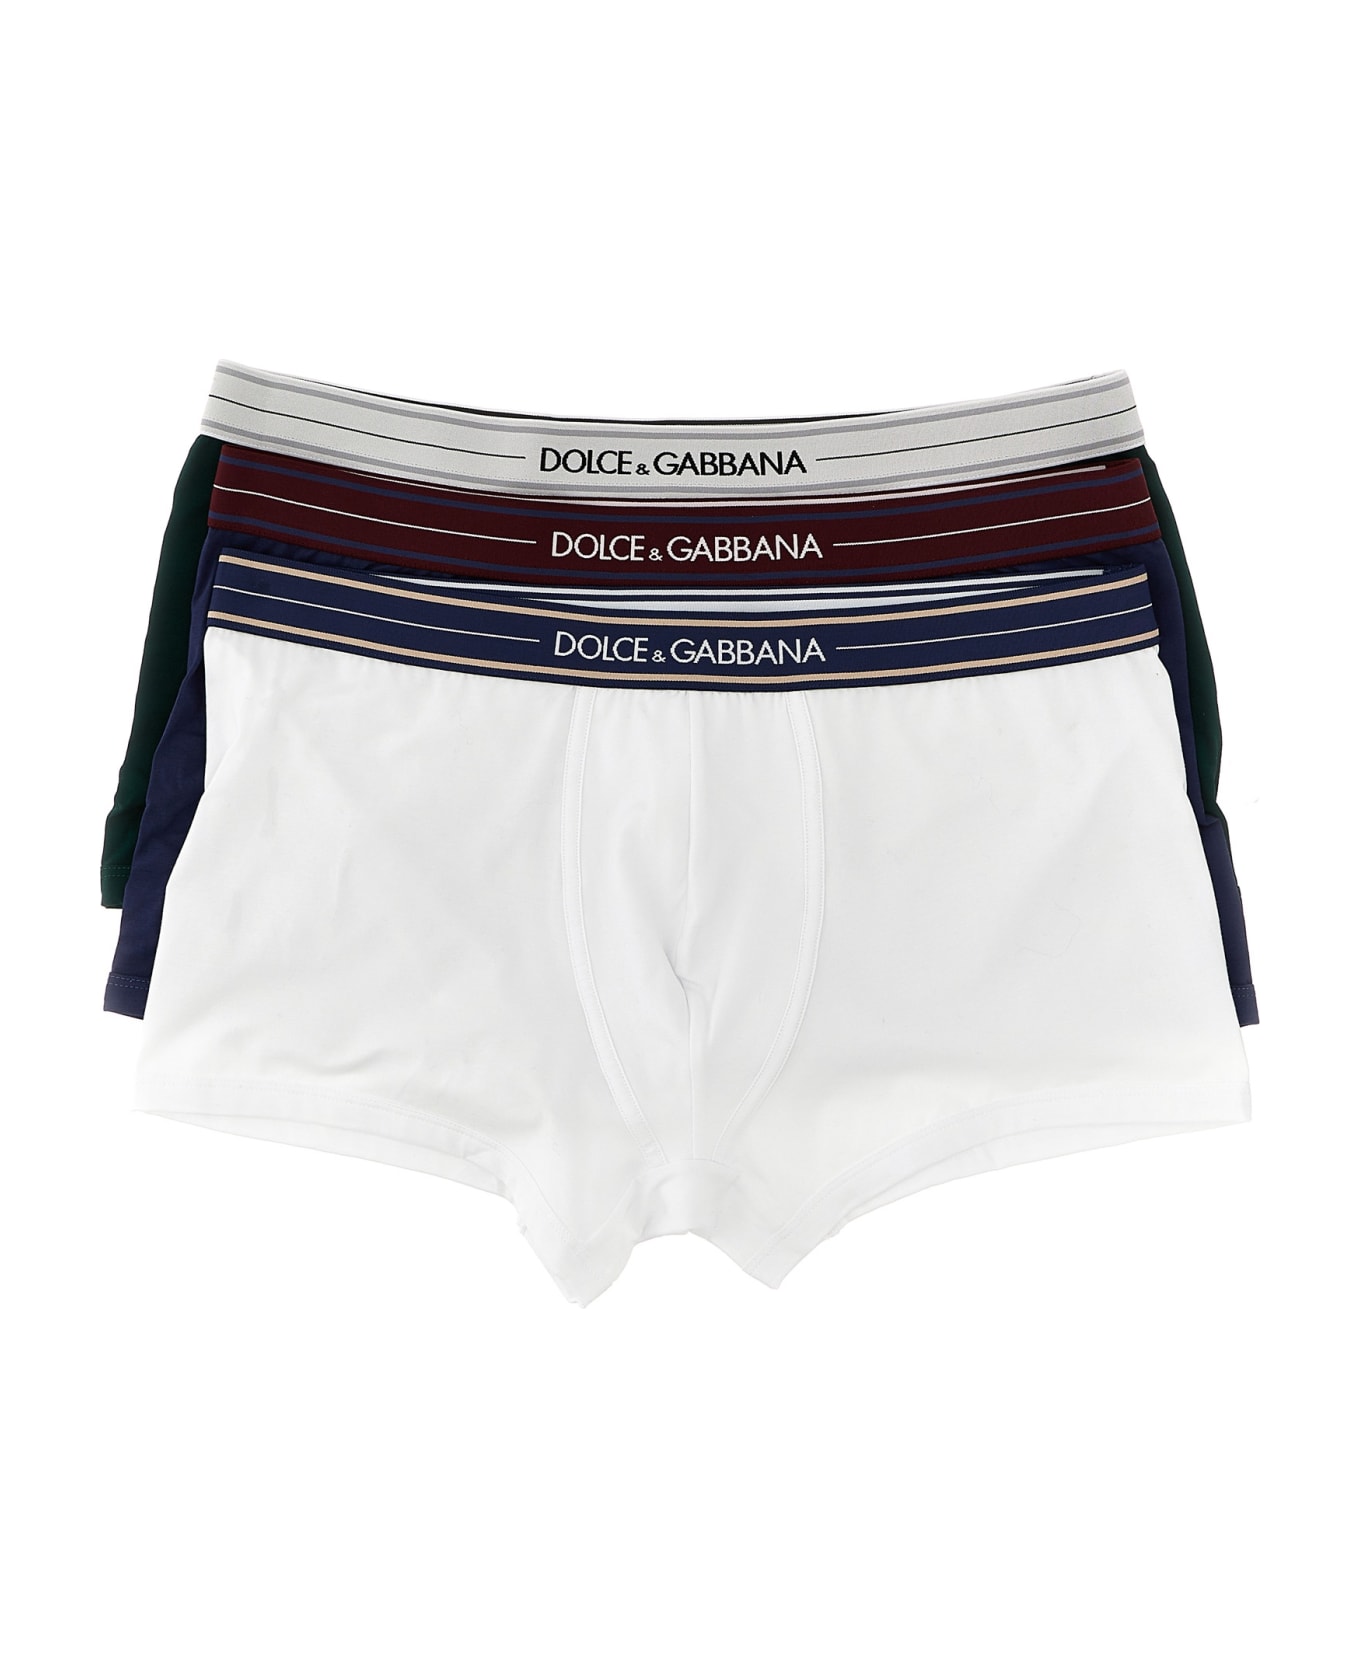 Dolce & Gabbana 'regular' 3-pack Boxers - Multicolor ショーツ